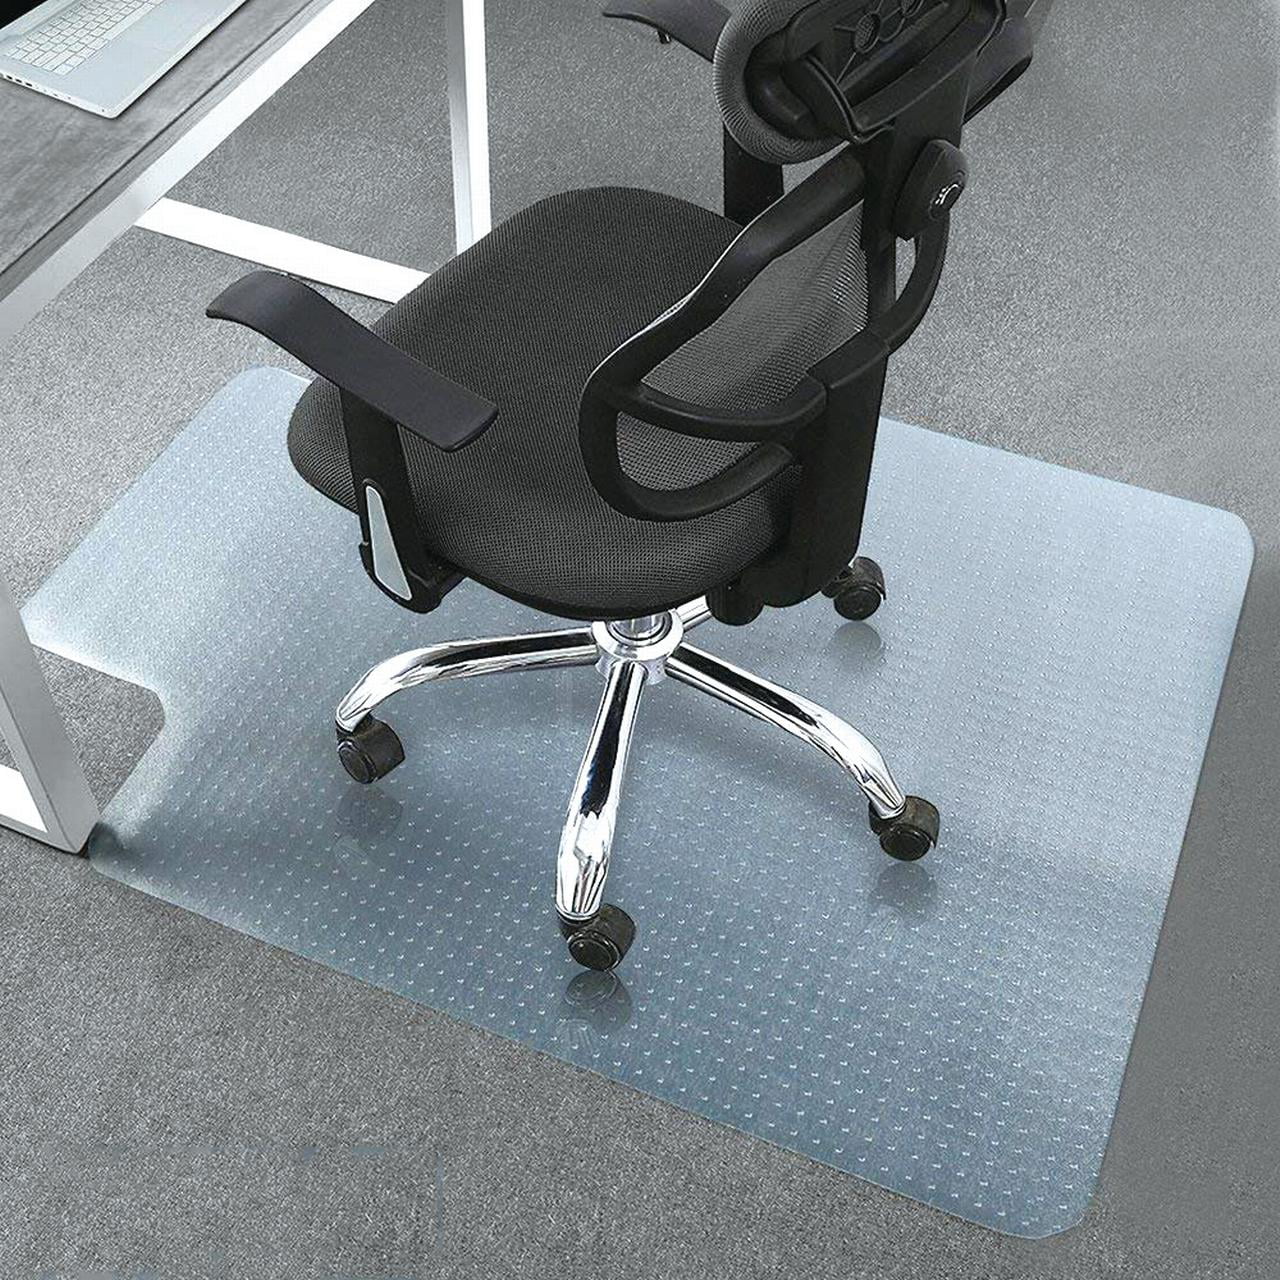 UBesGoo Office Chair mat for Carpet, Floor mat for Office Chair(Rolling Chairs)-Desk Mat&Office